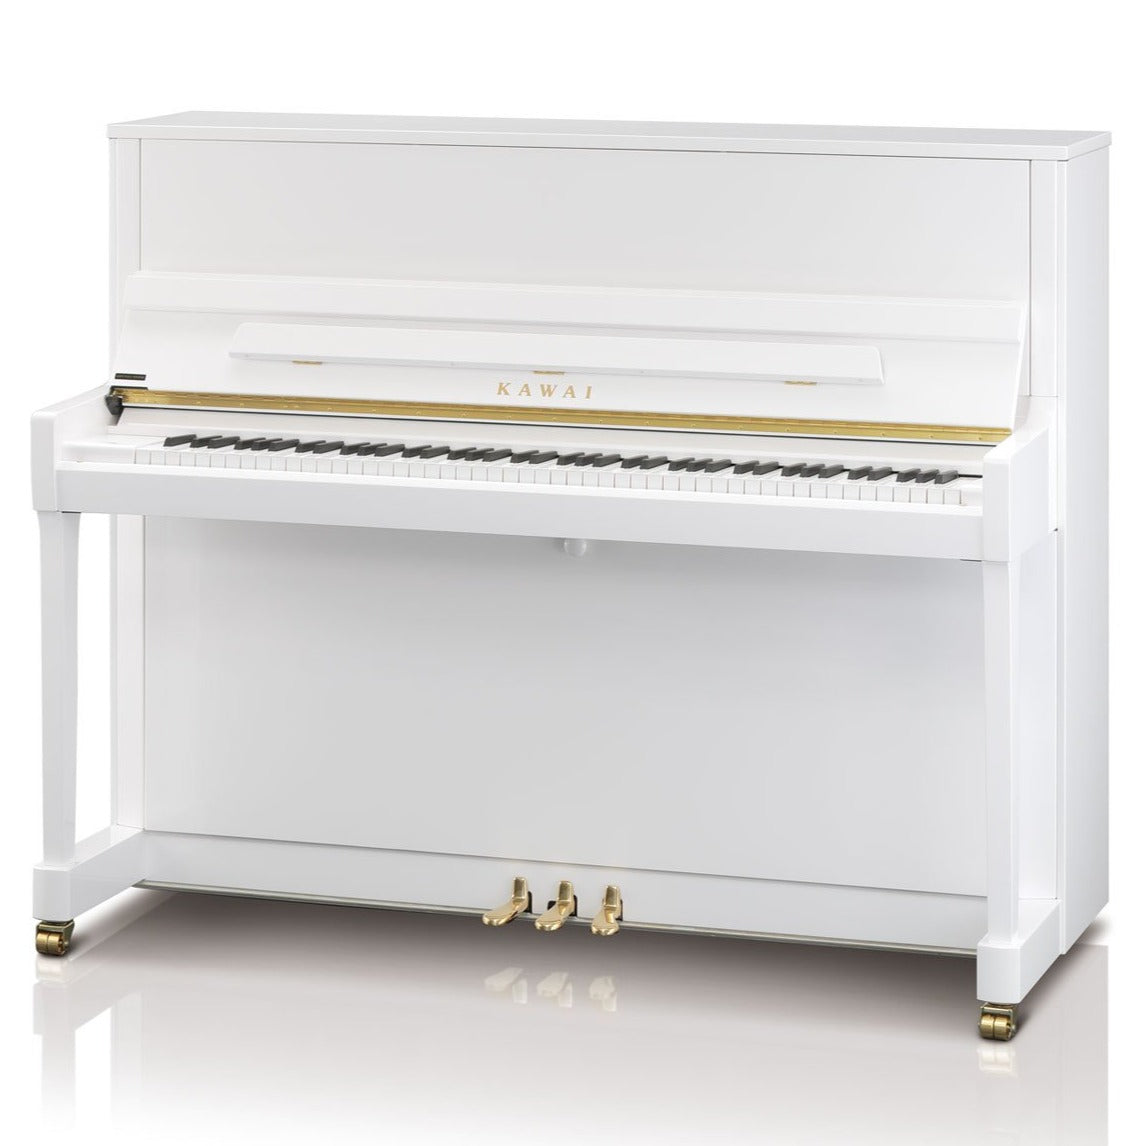 KAWAI K-300 UPRIGHT PIANO WHITE POLISH (122CM) W/BENCH (MII), KAWAI, ACOUSTIC PIANO, kawai-acoustic-piano-k300-wh, ZOSO MUSIC SDN BHD